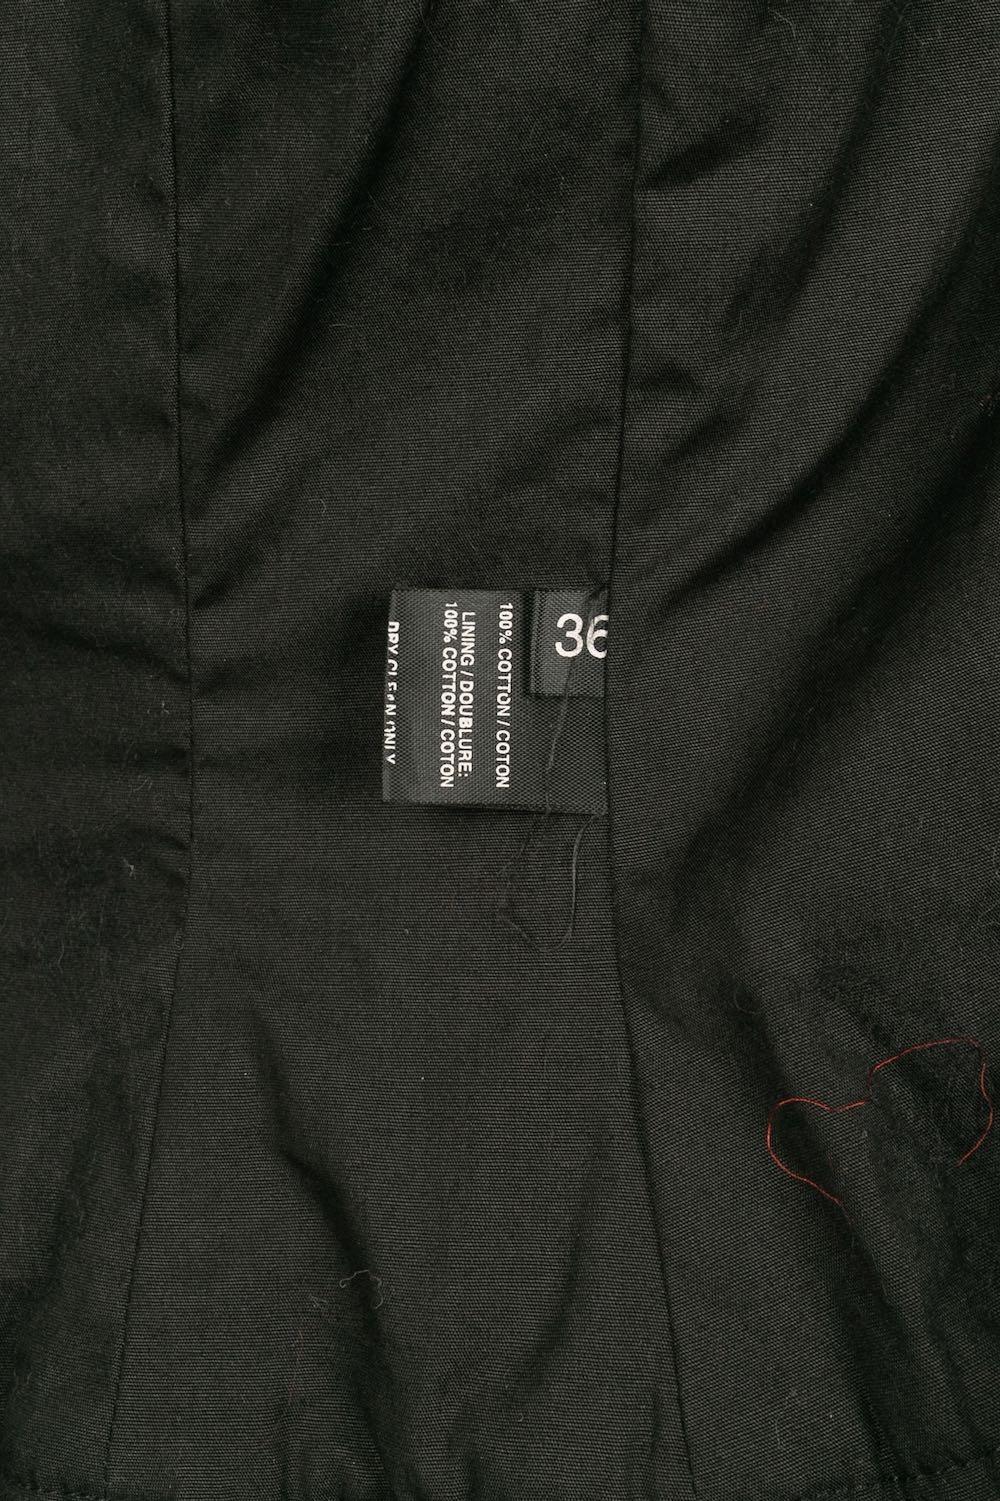 Peachoo + Krejberg Black Top in Black Cotton Shirt For Sale 3